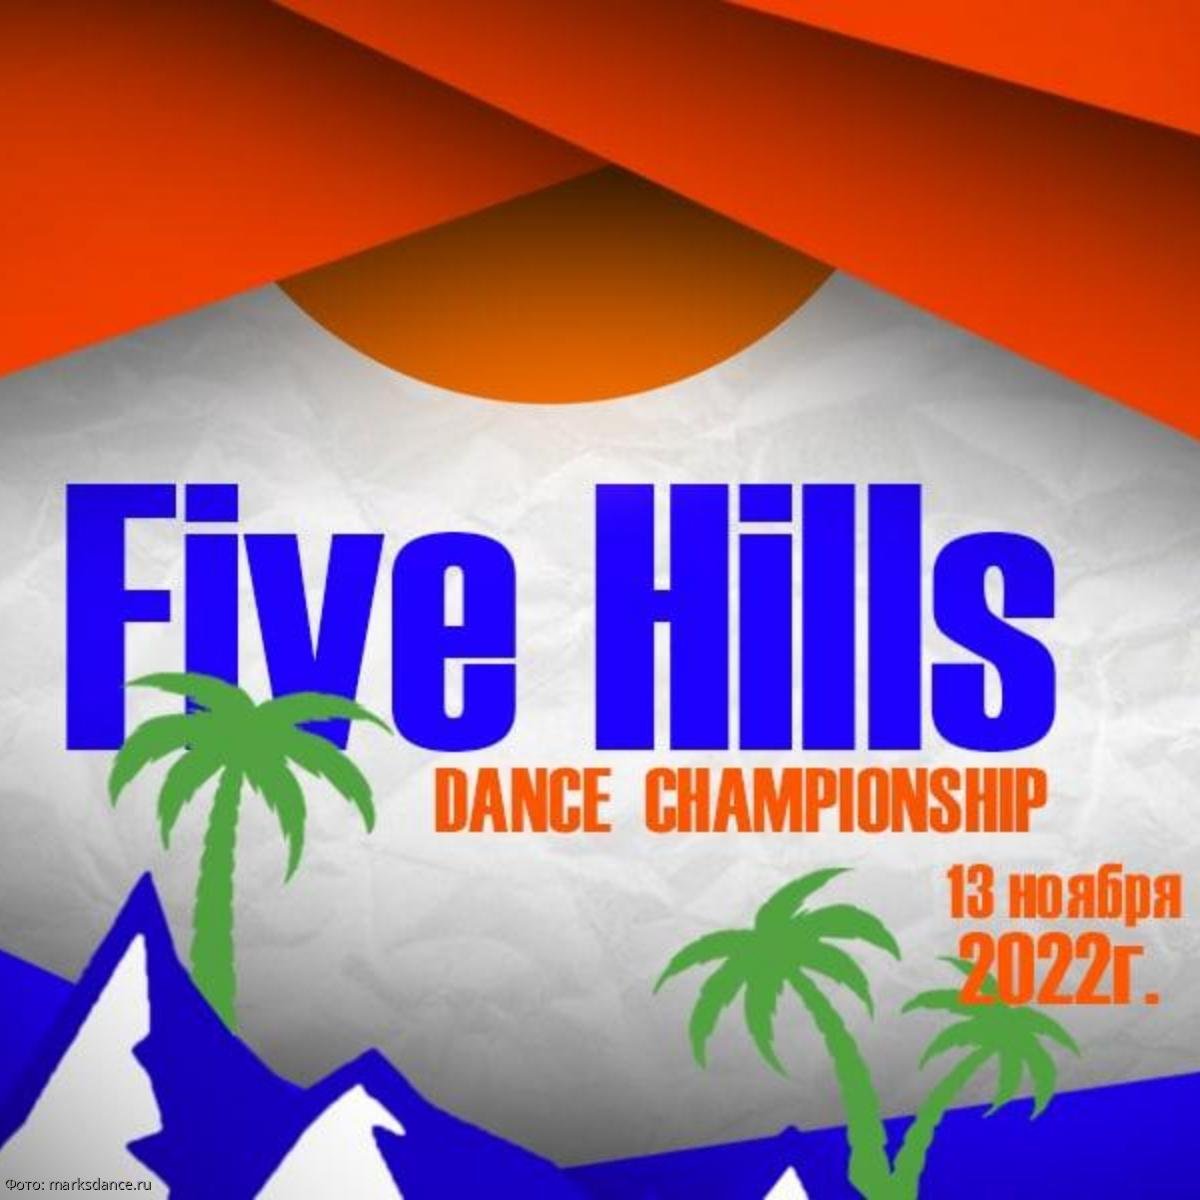 Five Hills Dance Championship